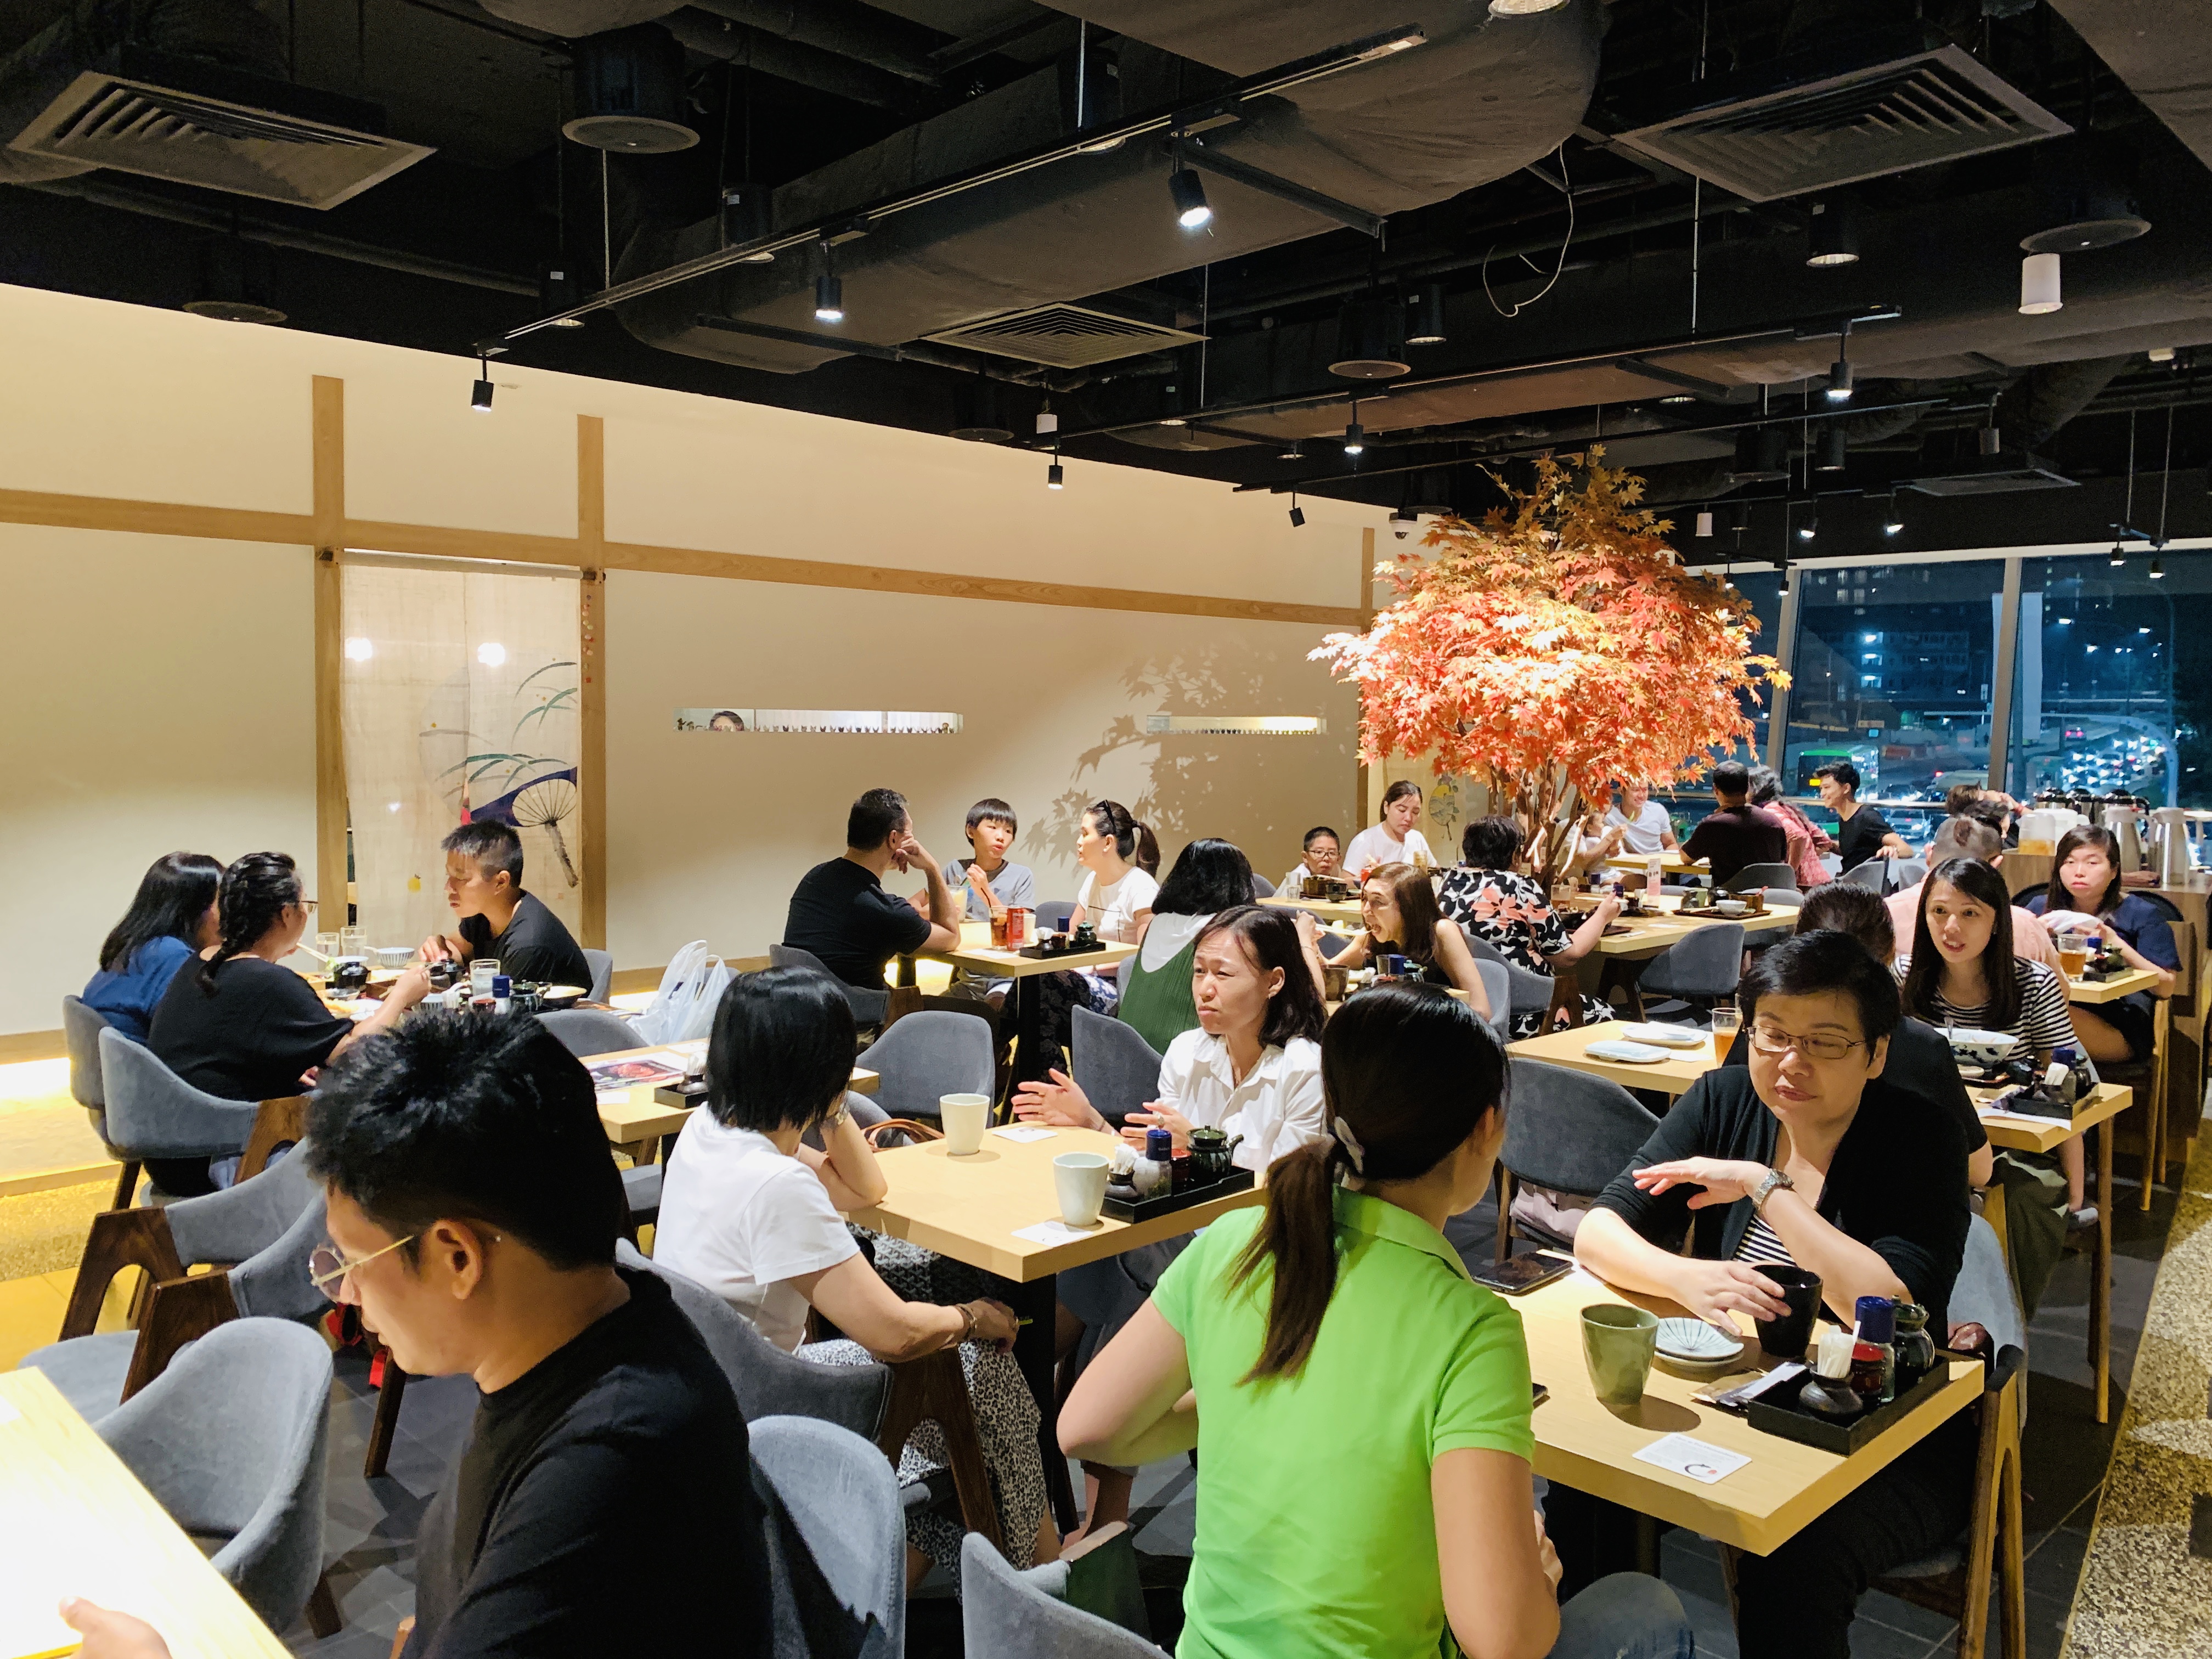 Uya Japanese Unagi Restaurant - Interior